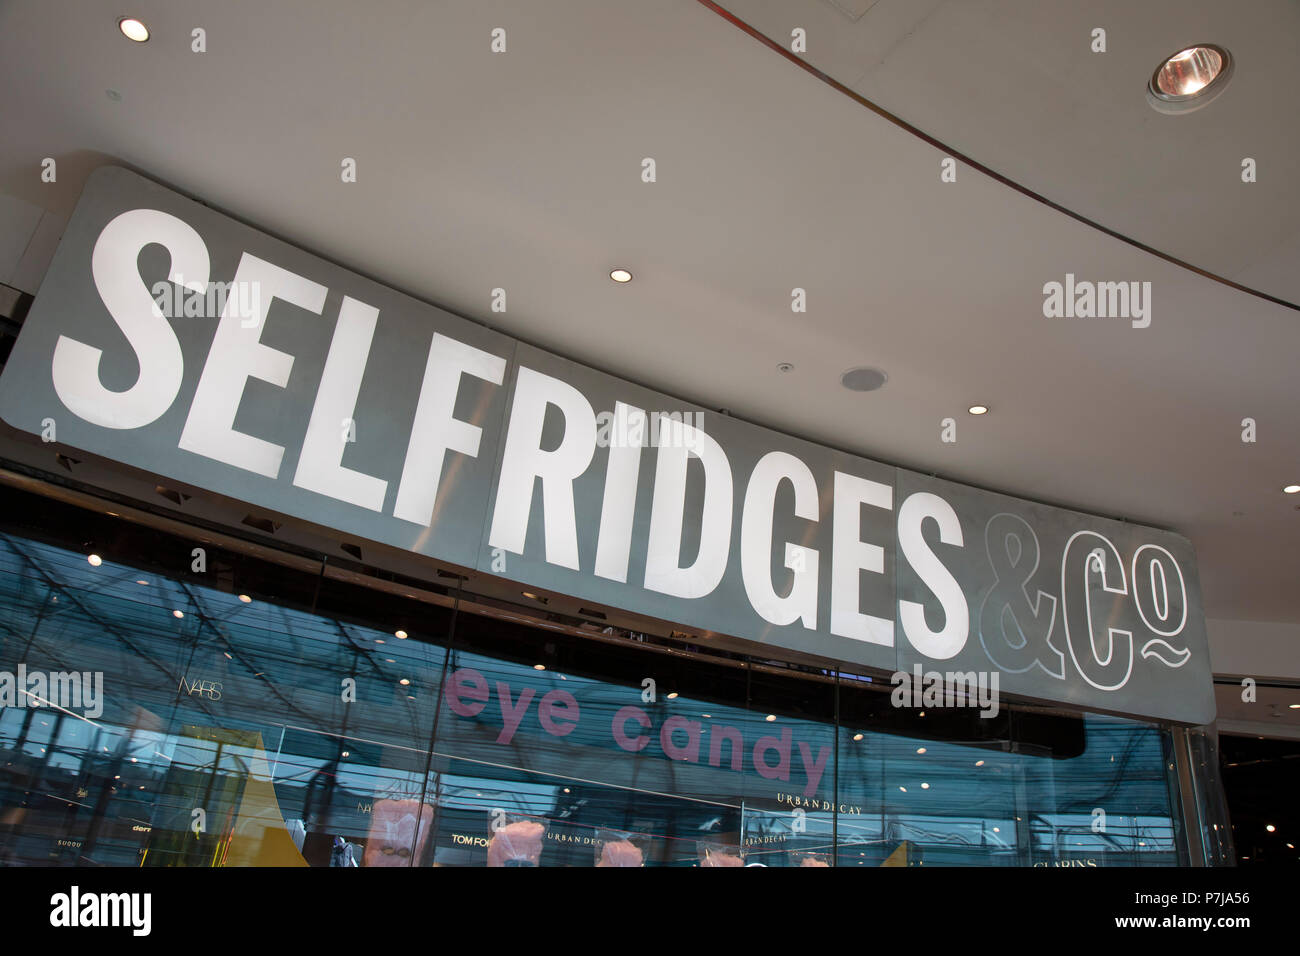 Shop brands - Selfridges